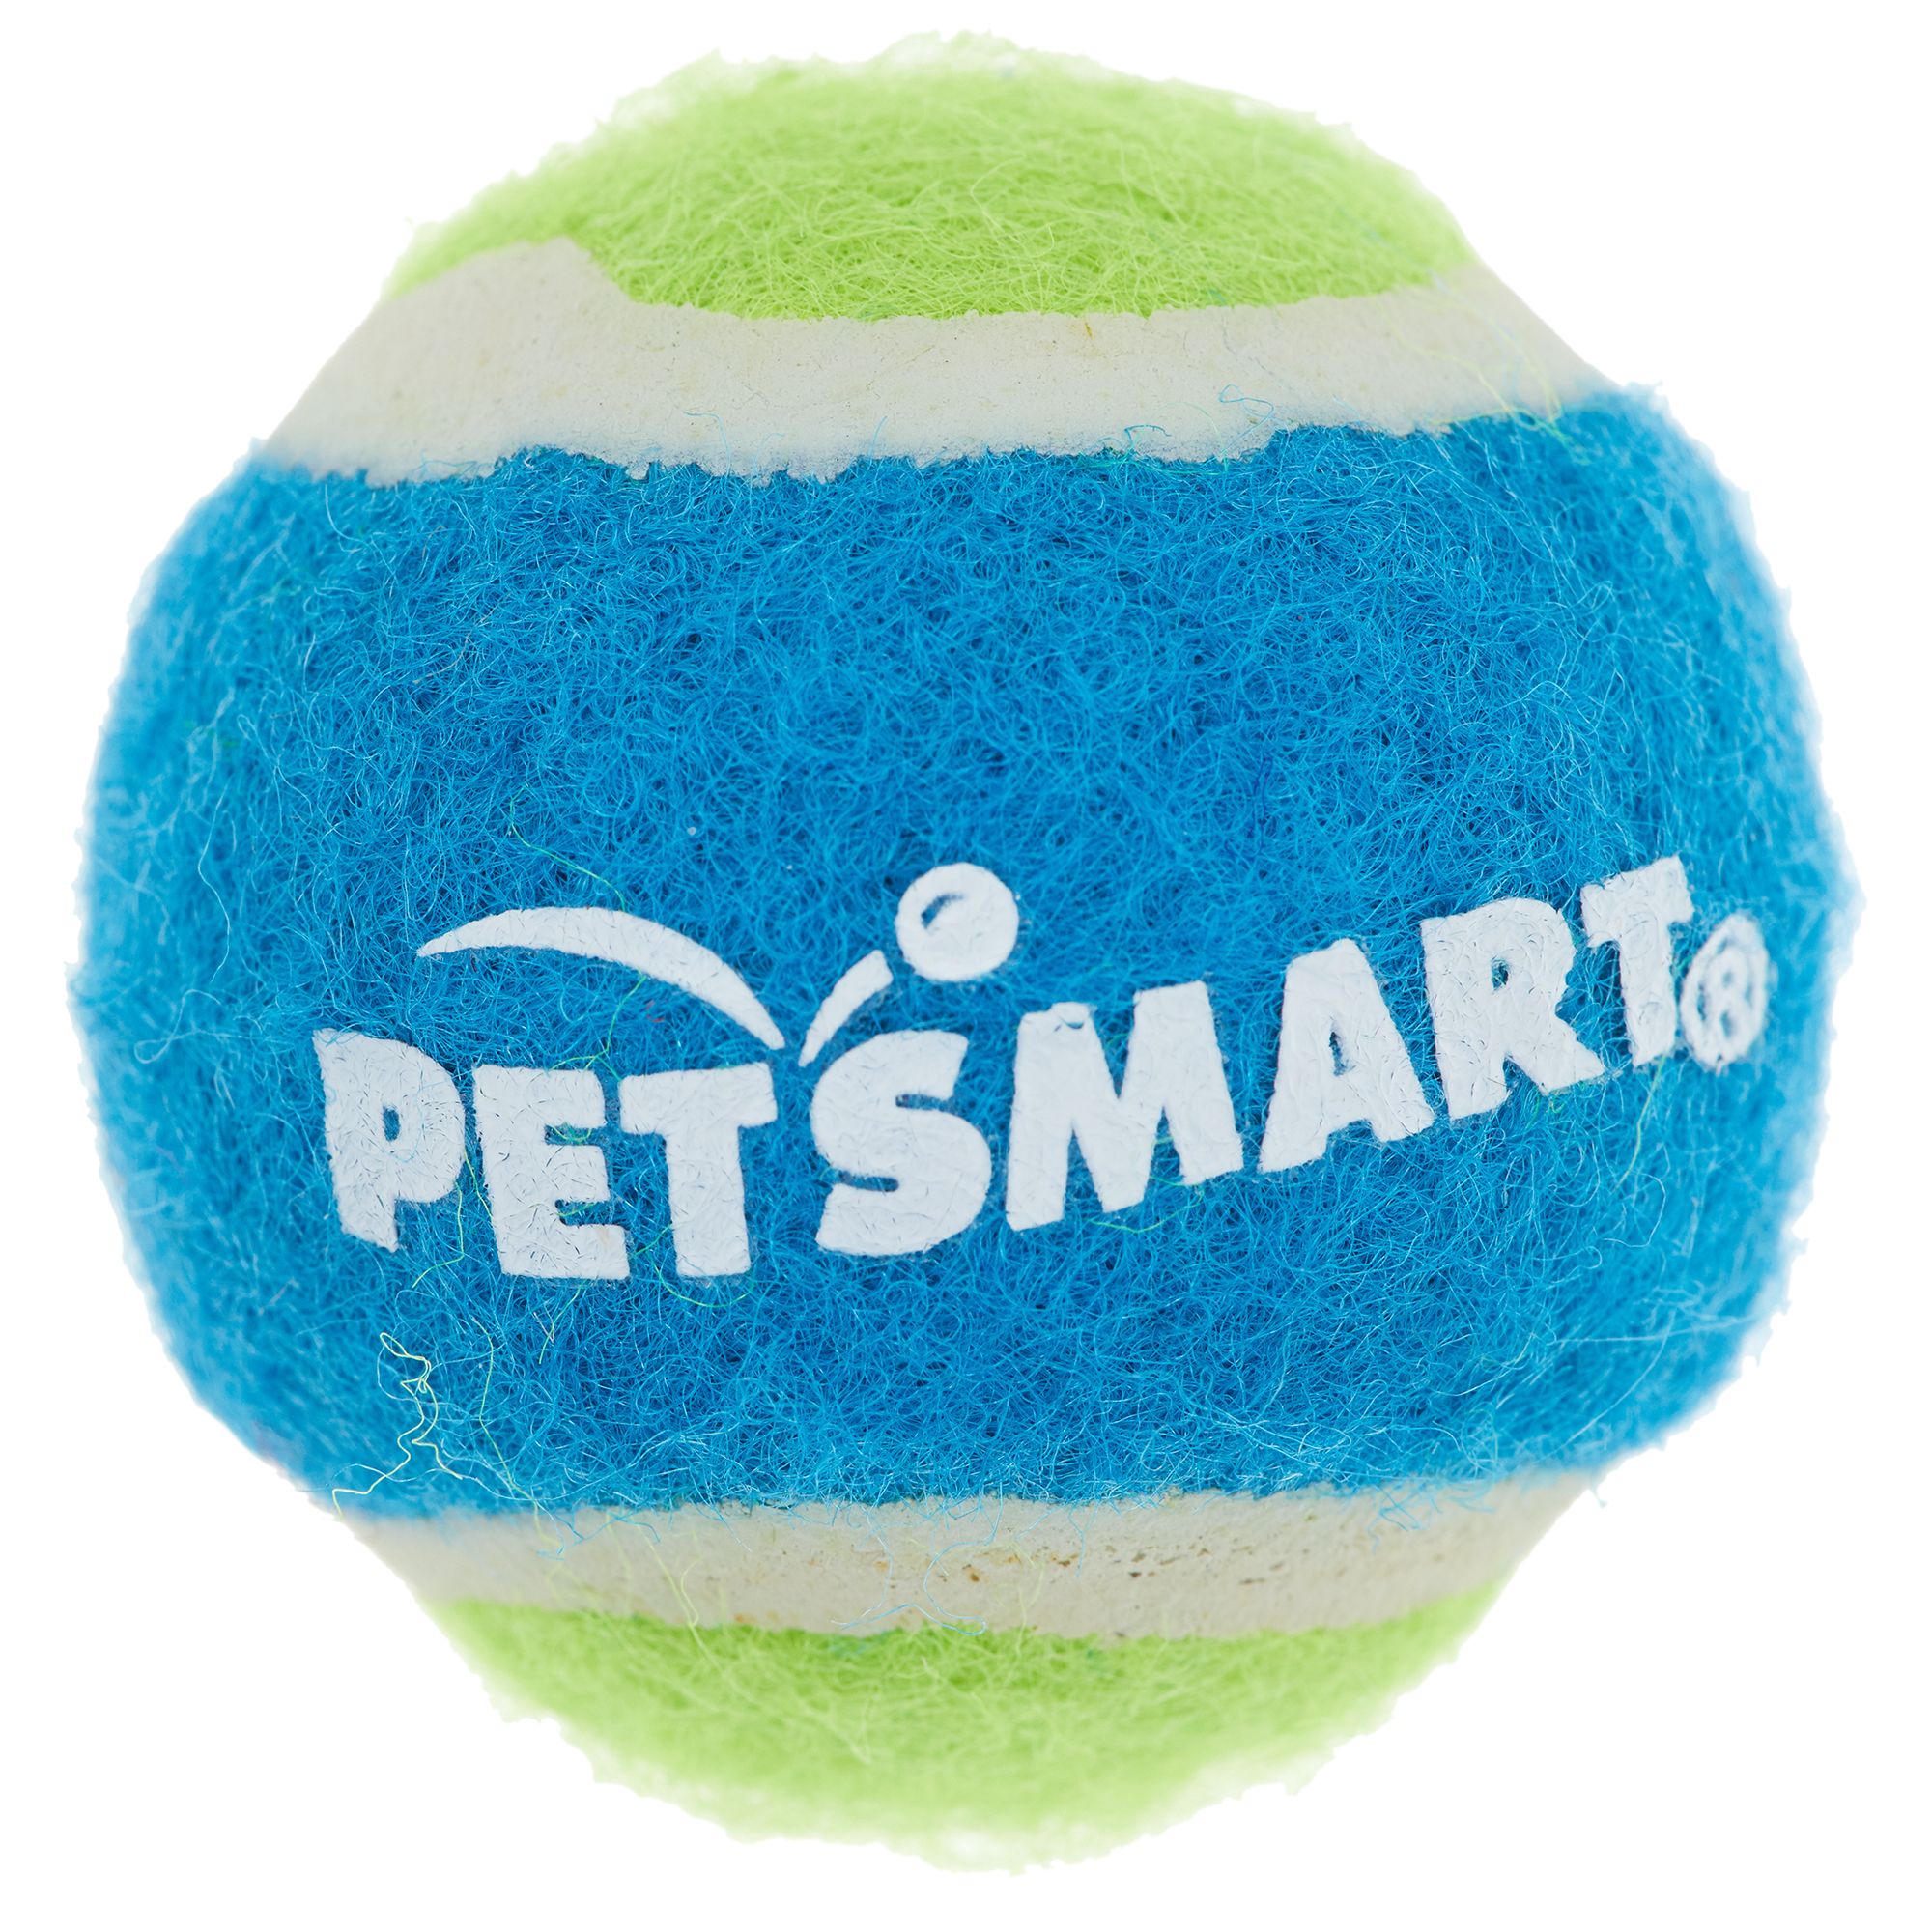 petsmart treat ball